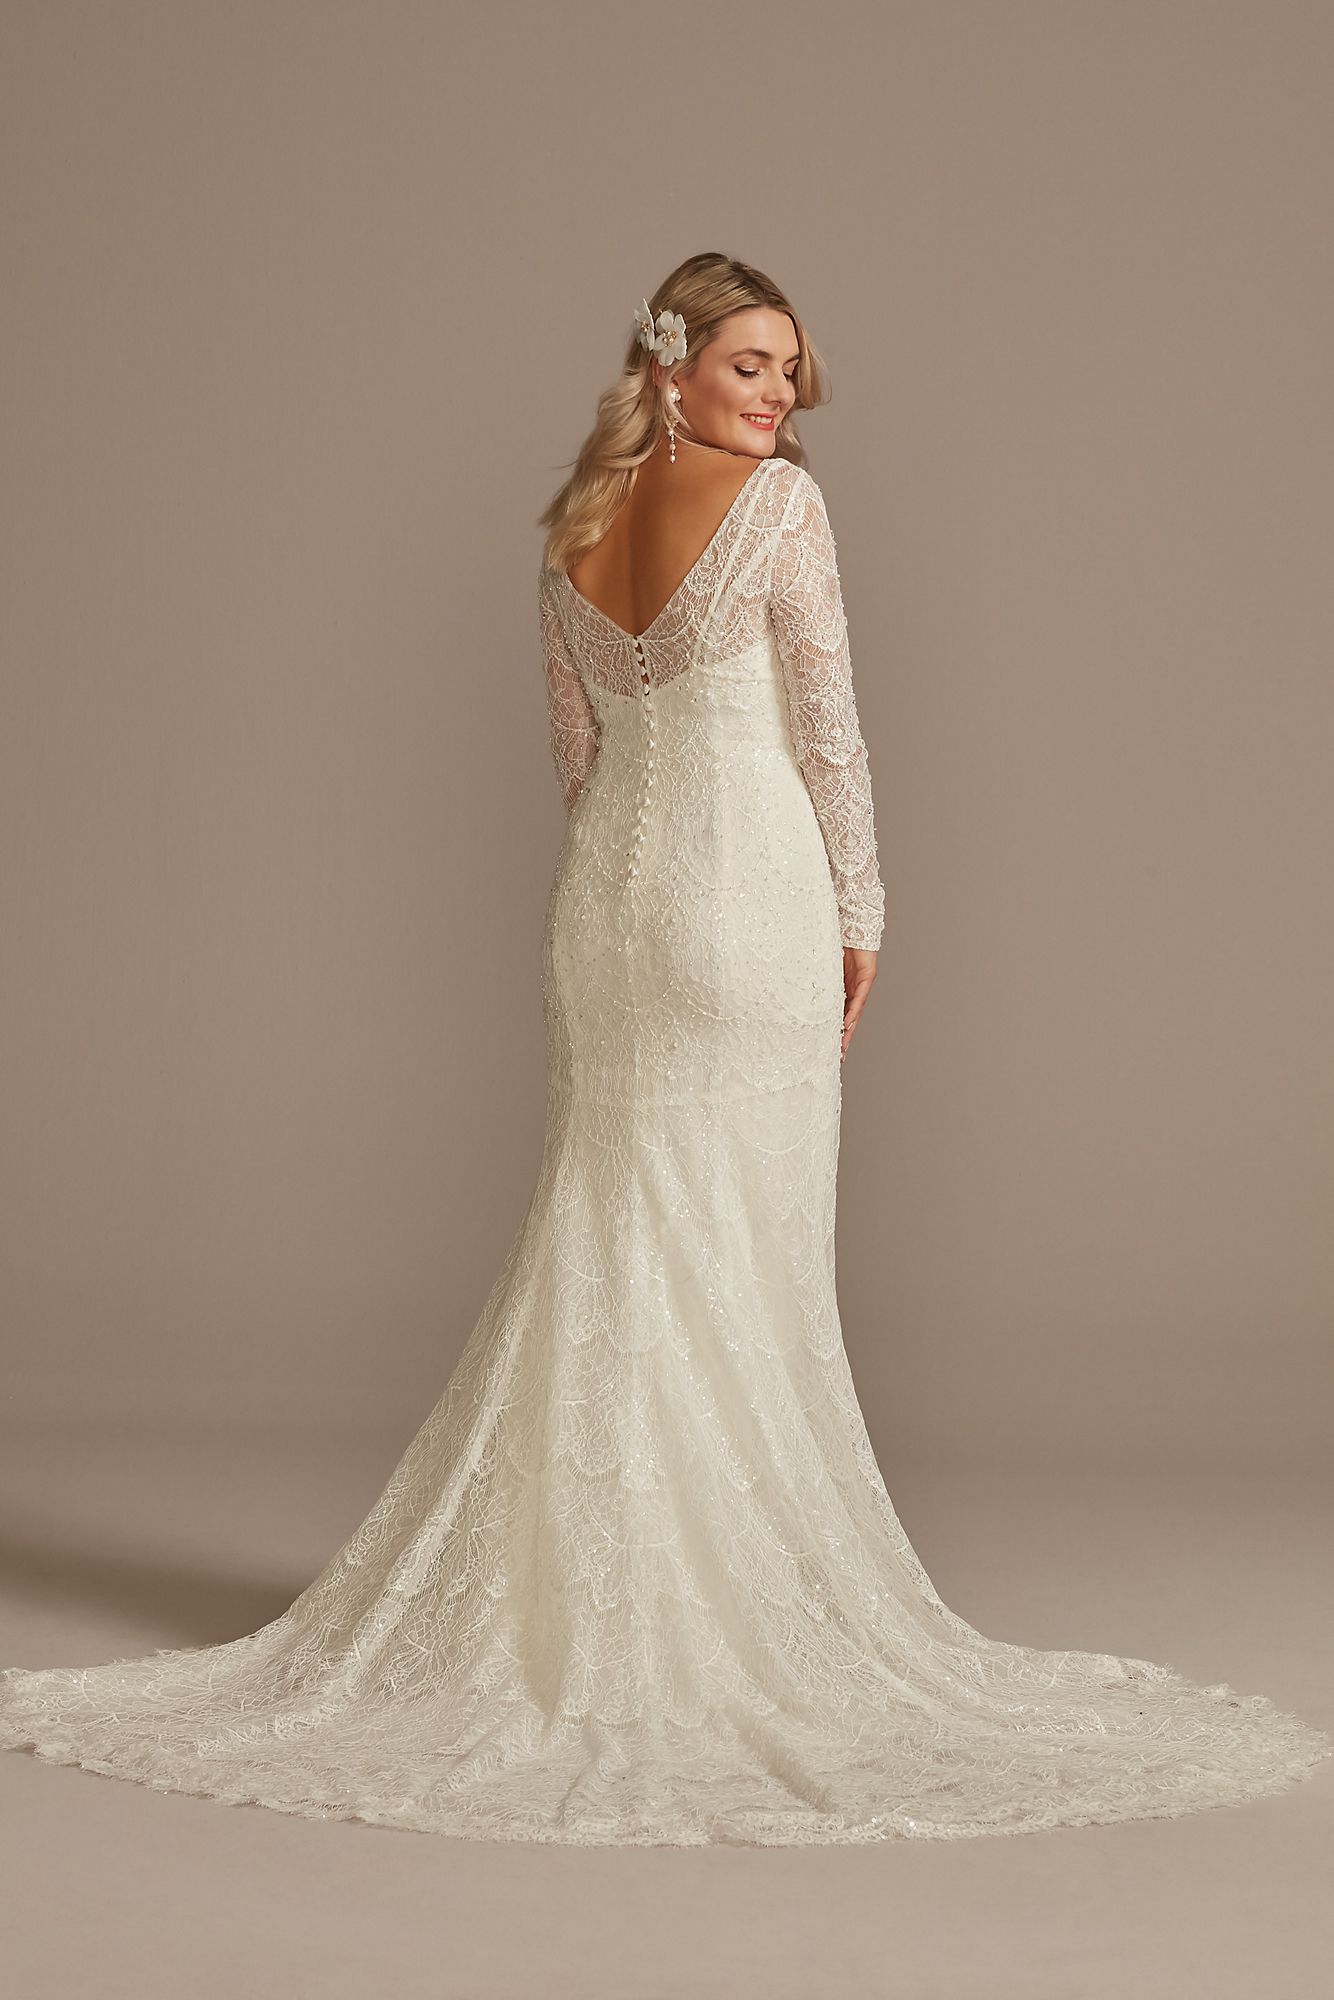 Hand Beaded Lace Long Sleeve Petite Wedding Dress Melissa Sweet 7SLMS251206